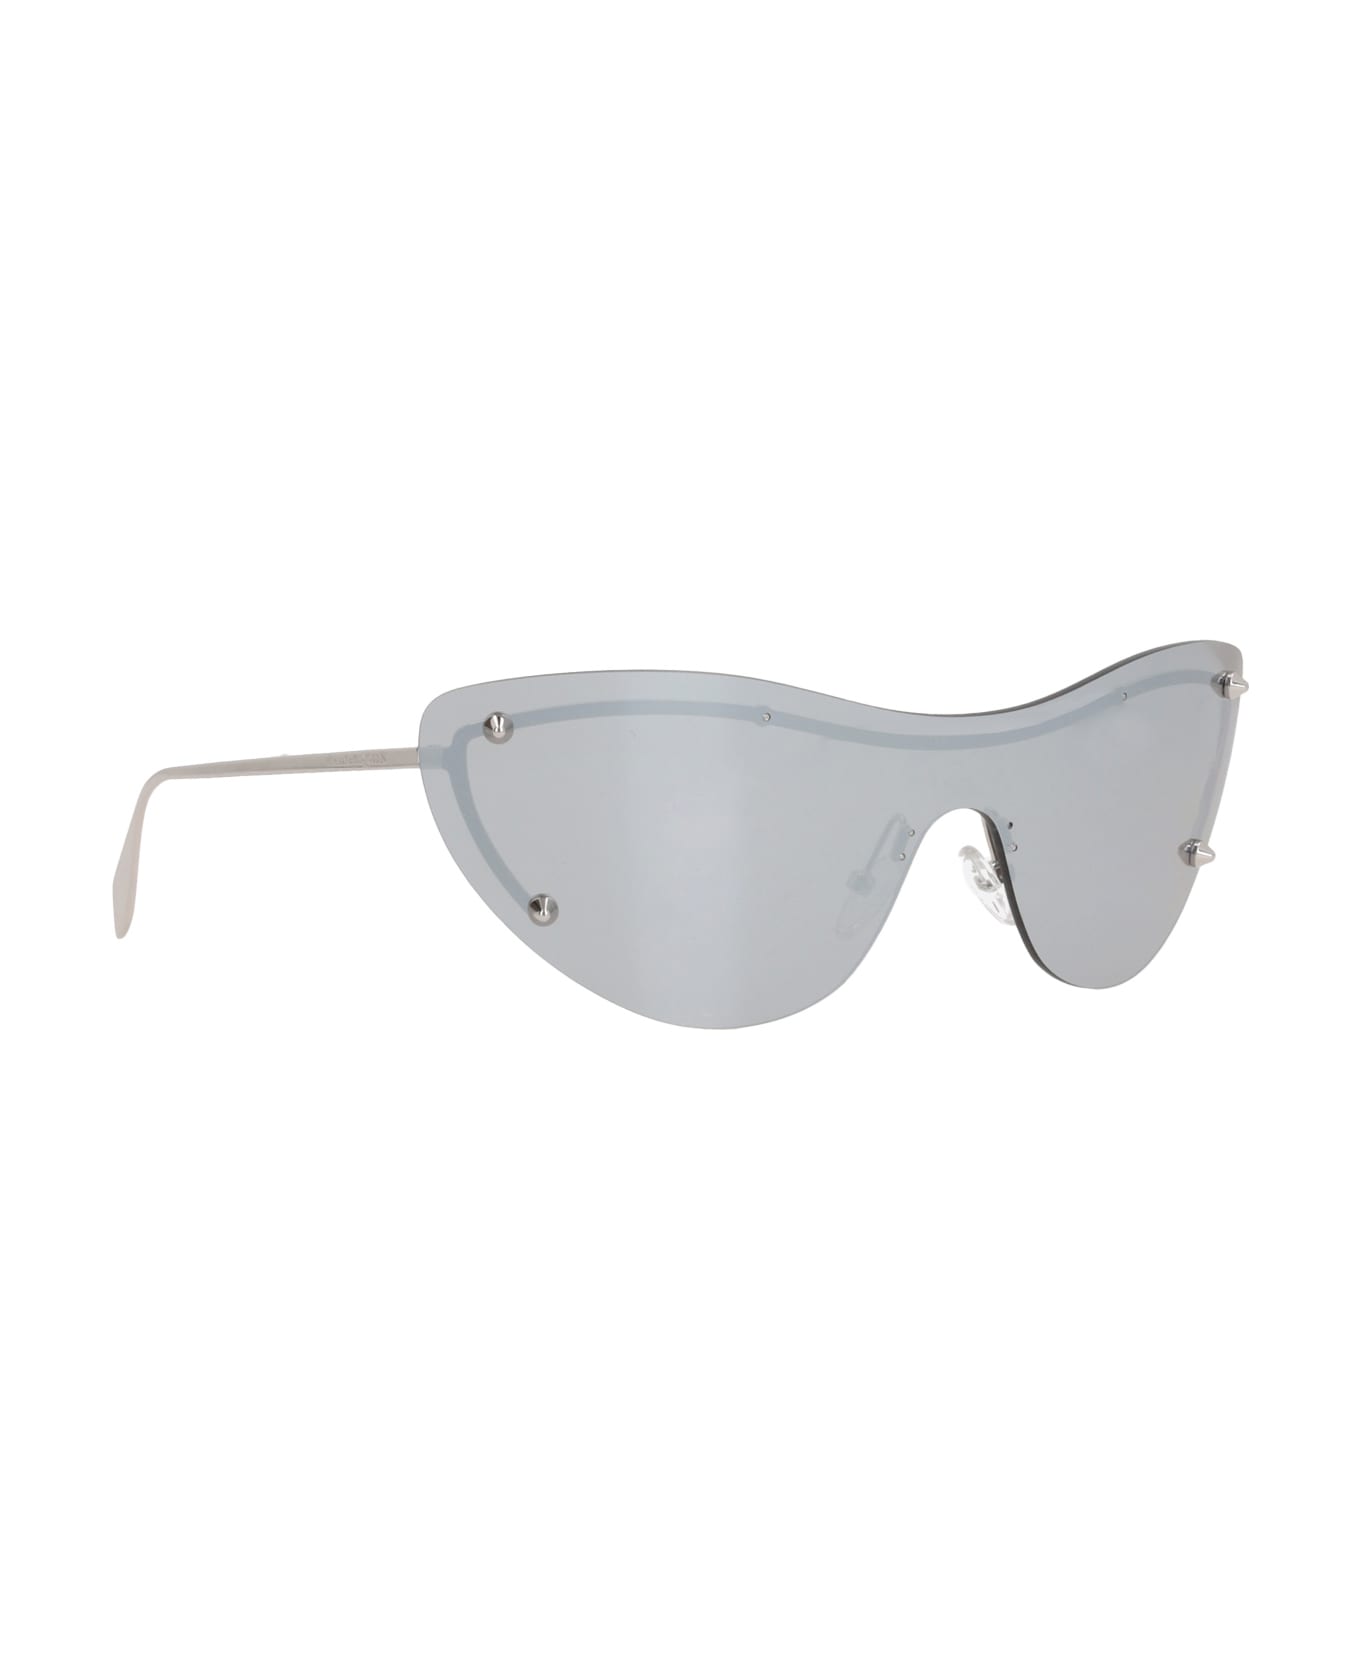 Alexander McQueen Eyewear Spike Studs Cat-eye Mask Sunglasses - Argento サングラス